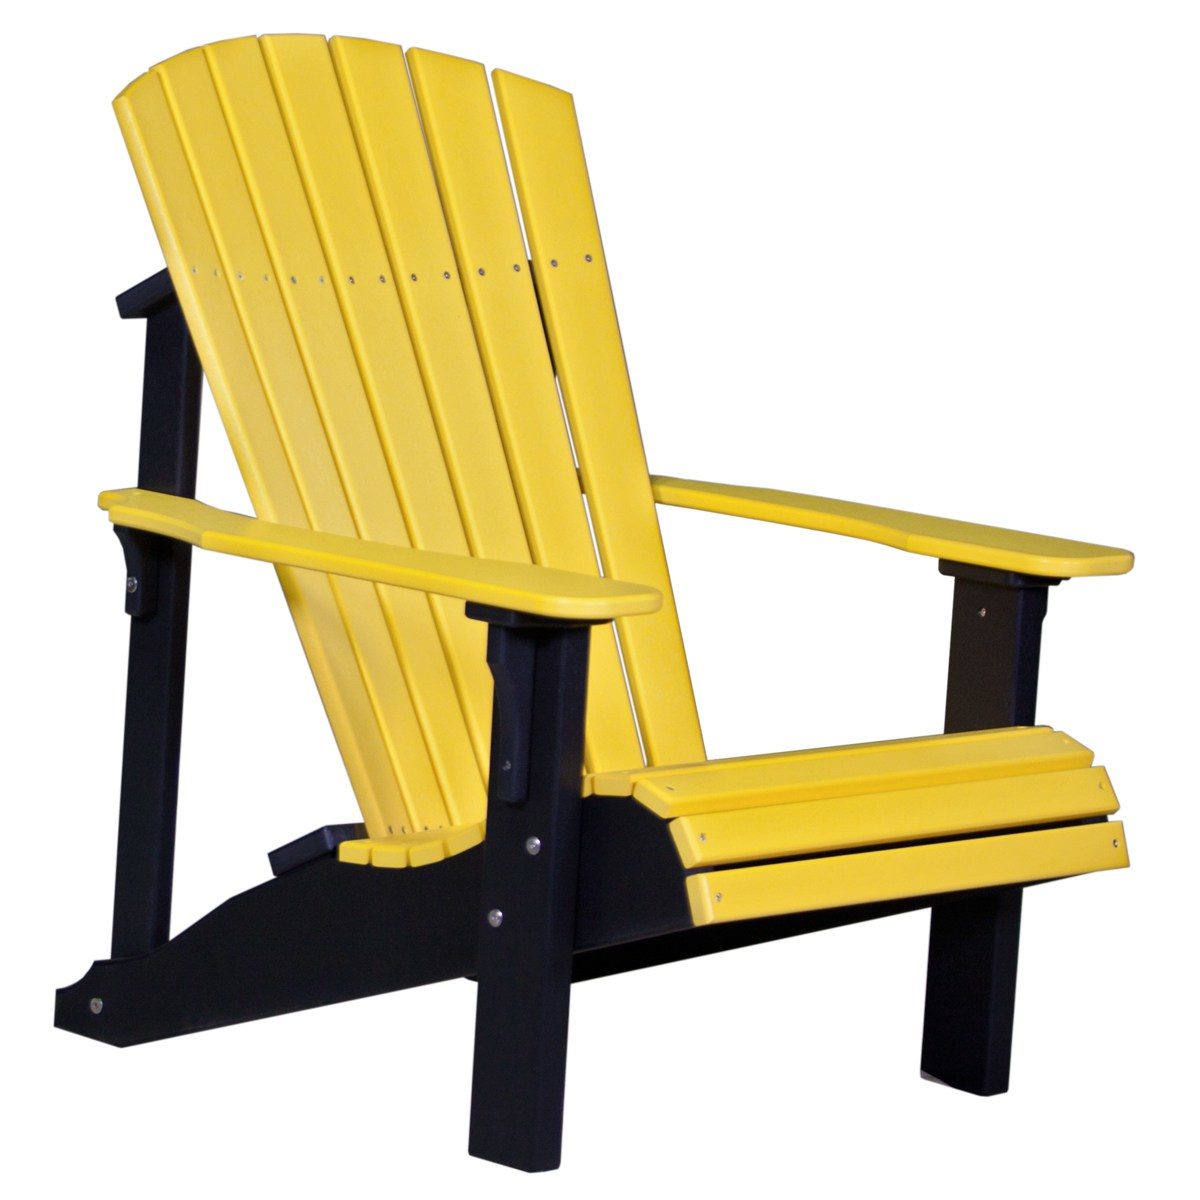 Deluxe Adirondack Chair - Yellow & Black